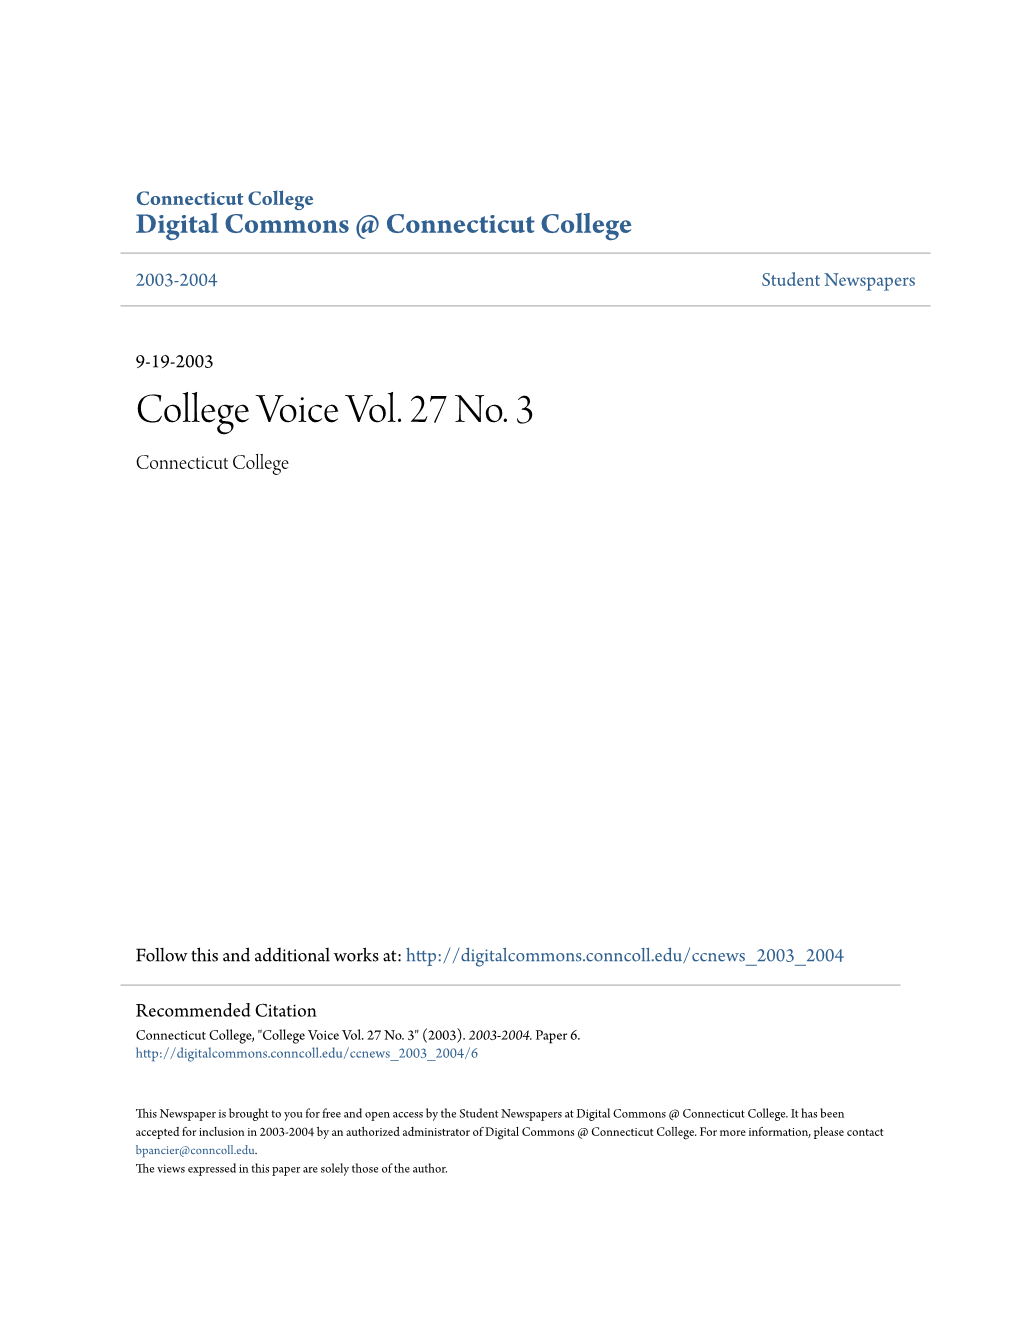 College Voice Vol. 27 No. 3 Connecticut College